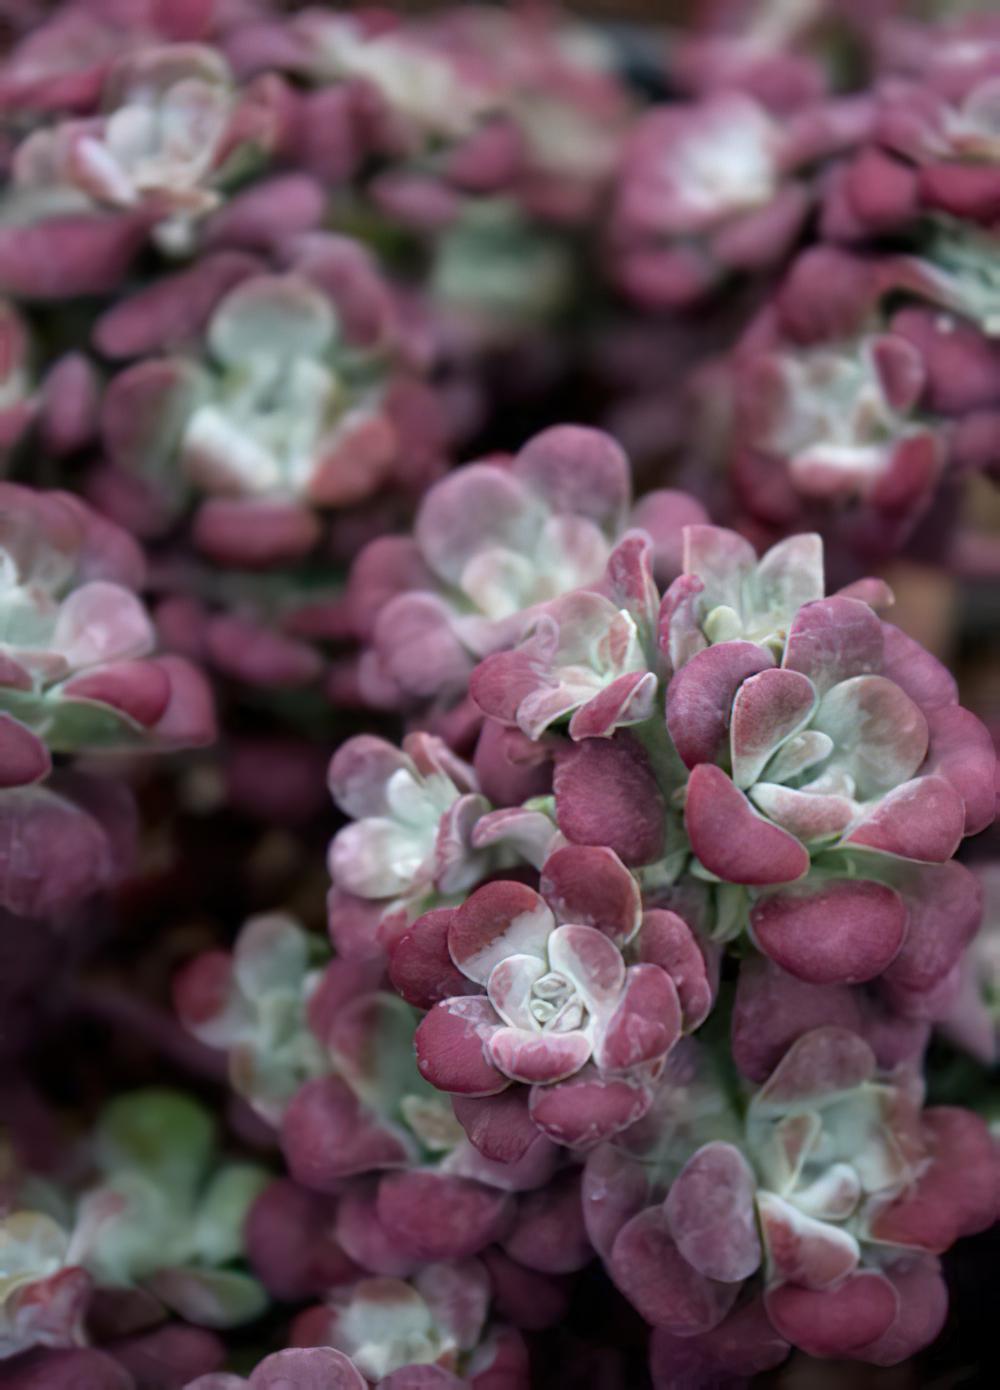 白霜/红霜 Sedum spathulifolium ssp. pruinosum